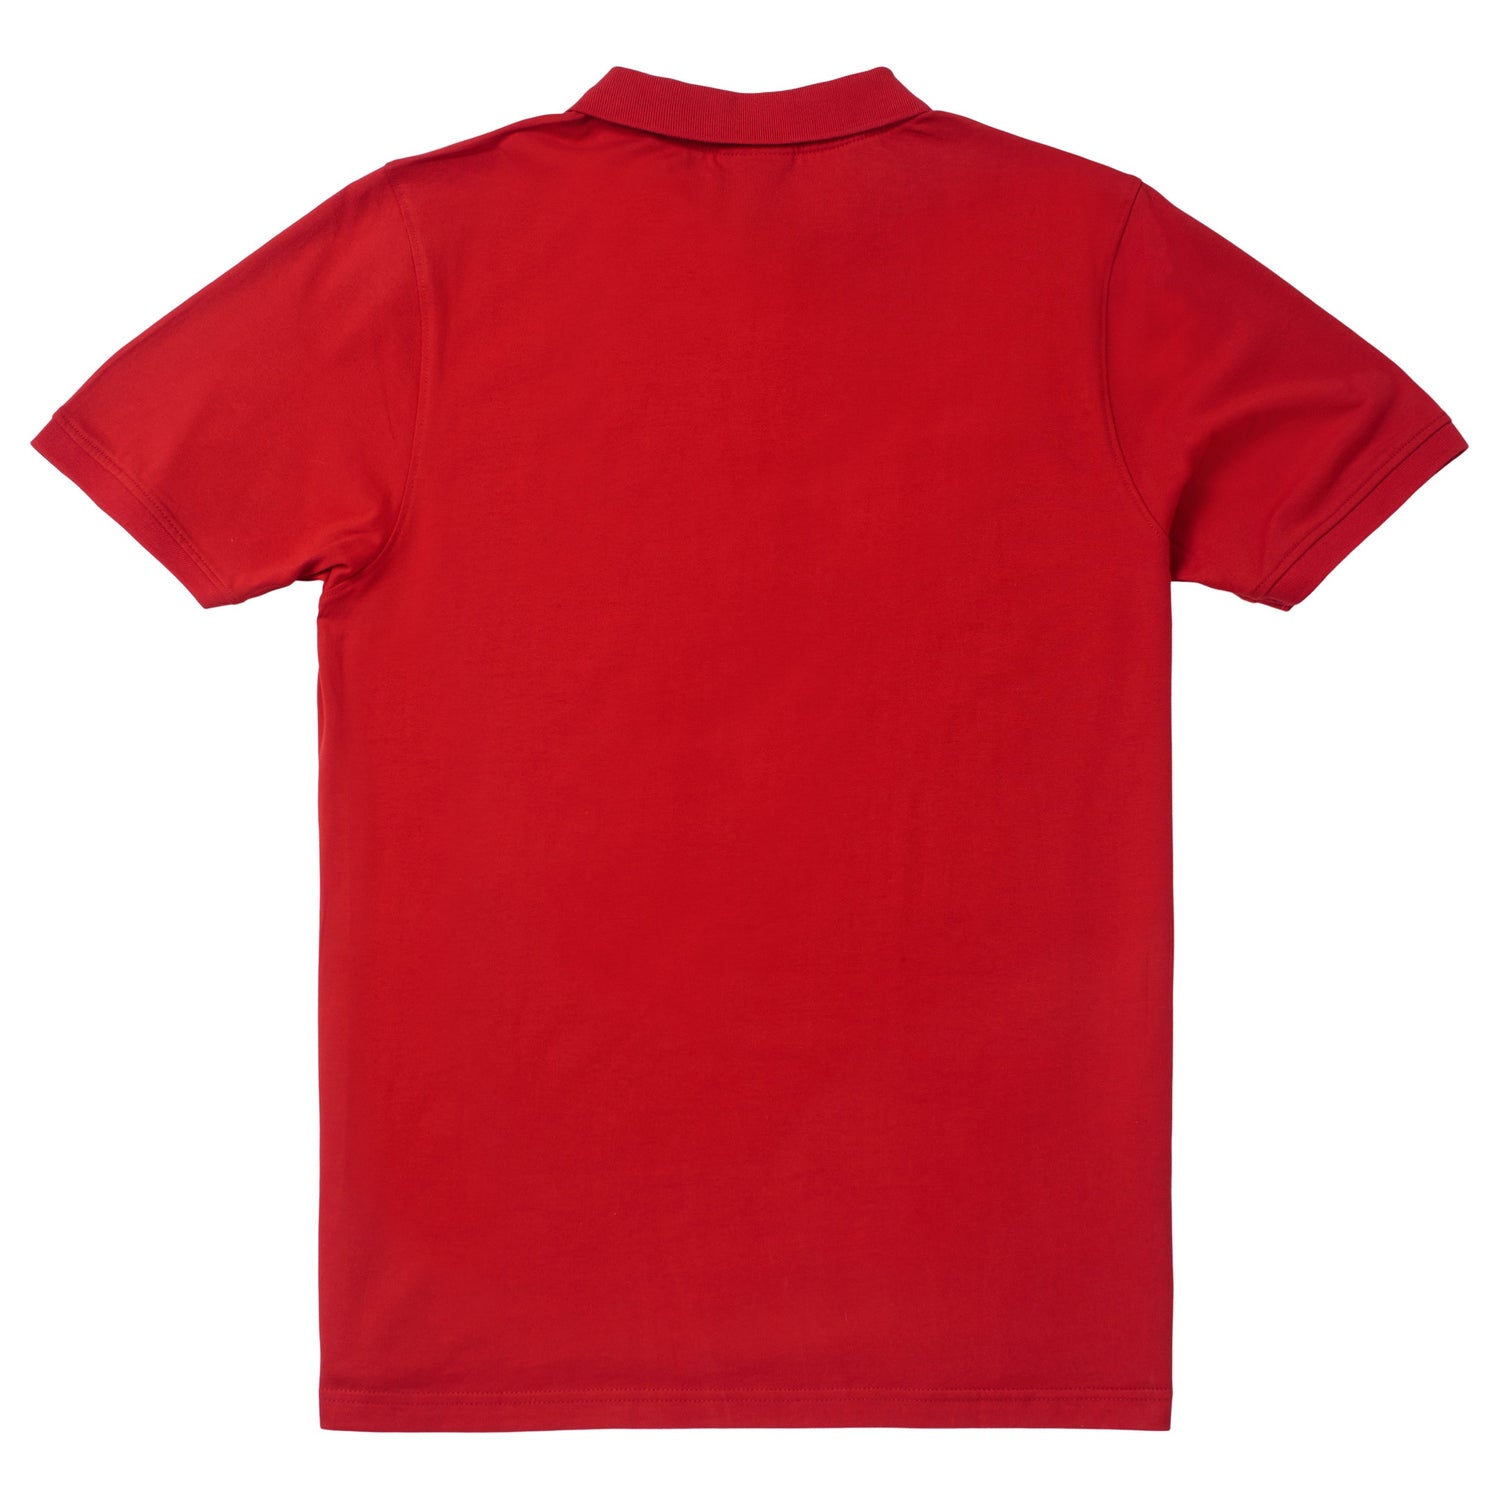 Plain Red Polo Shirts